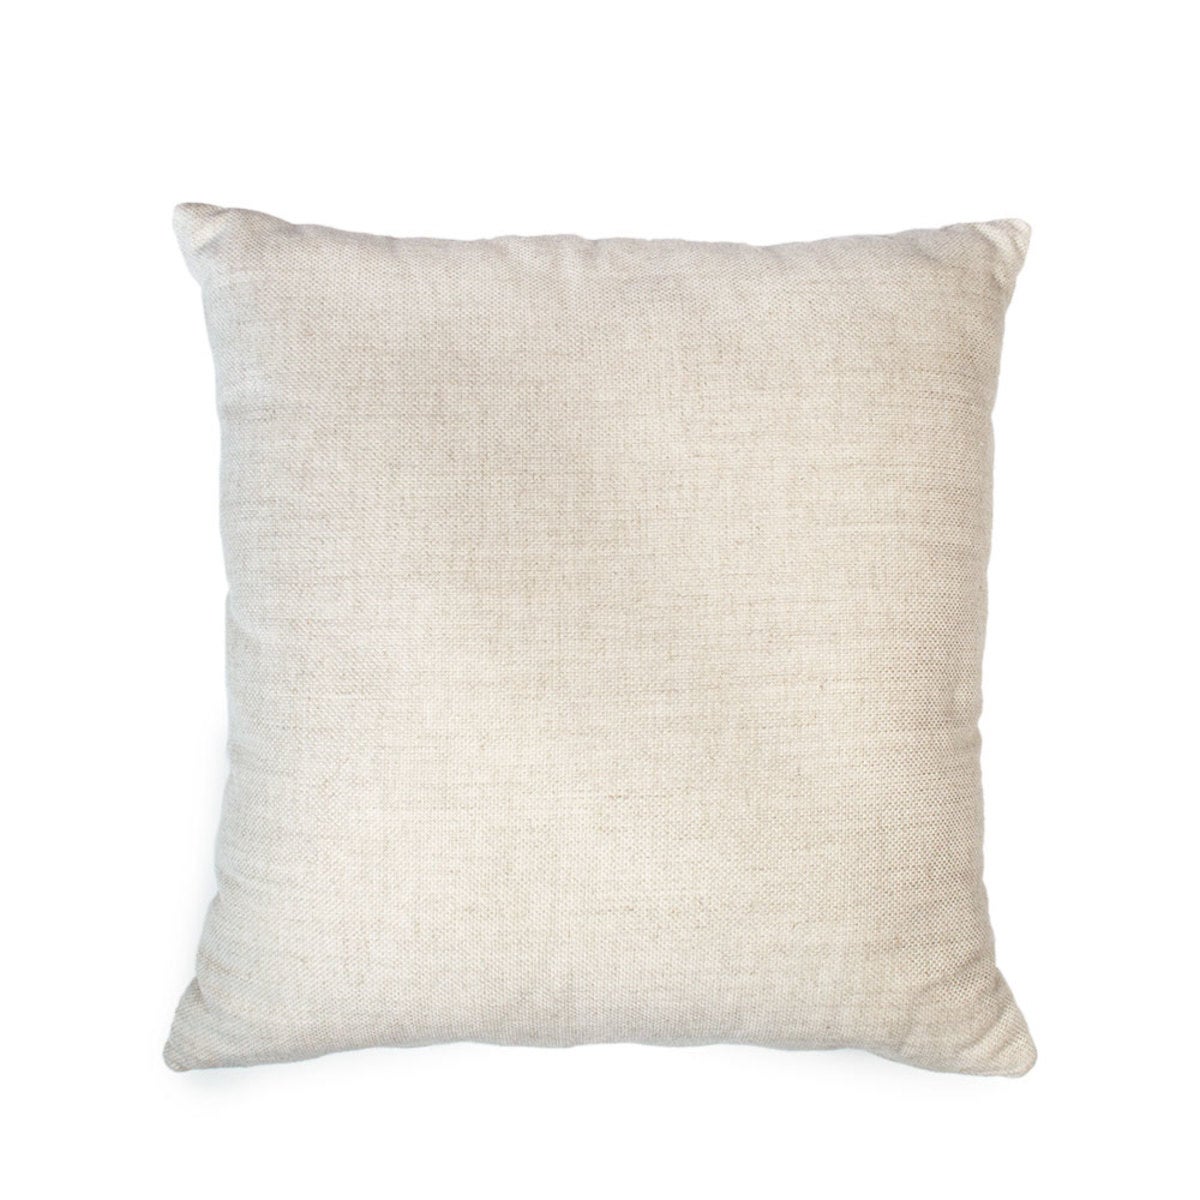 100% Pure Linen Pillow Cover 16" Square - Stone